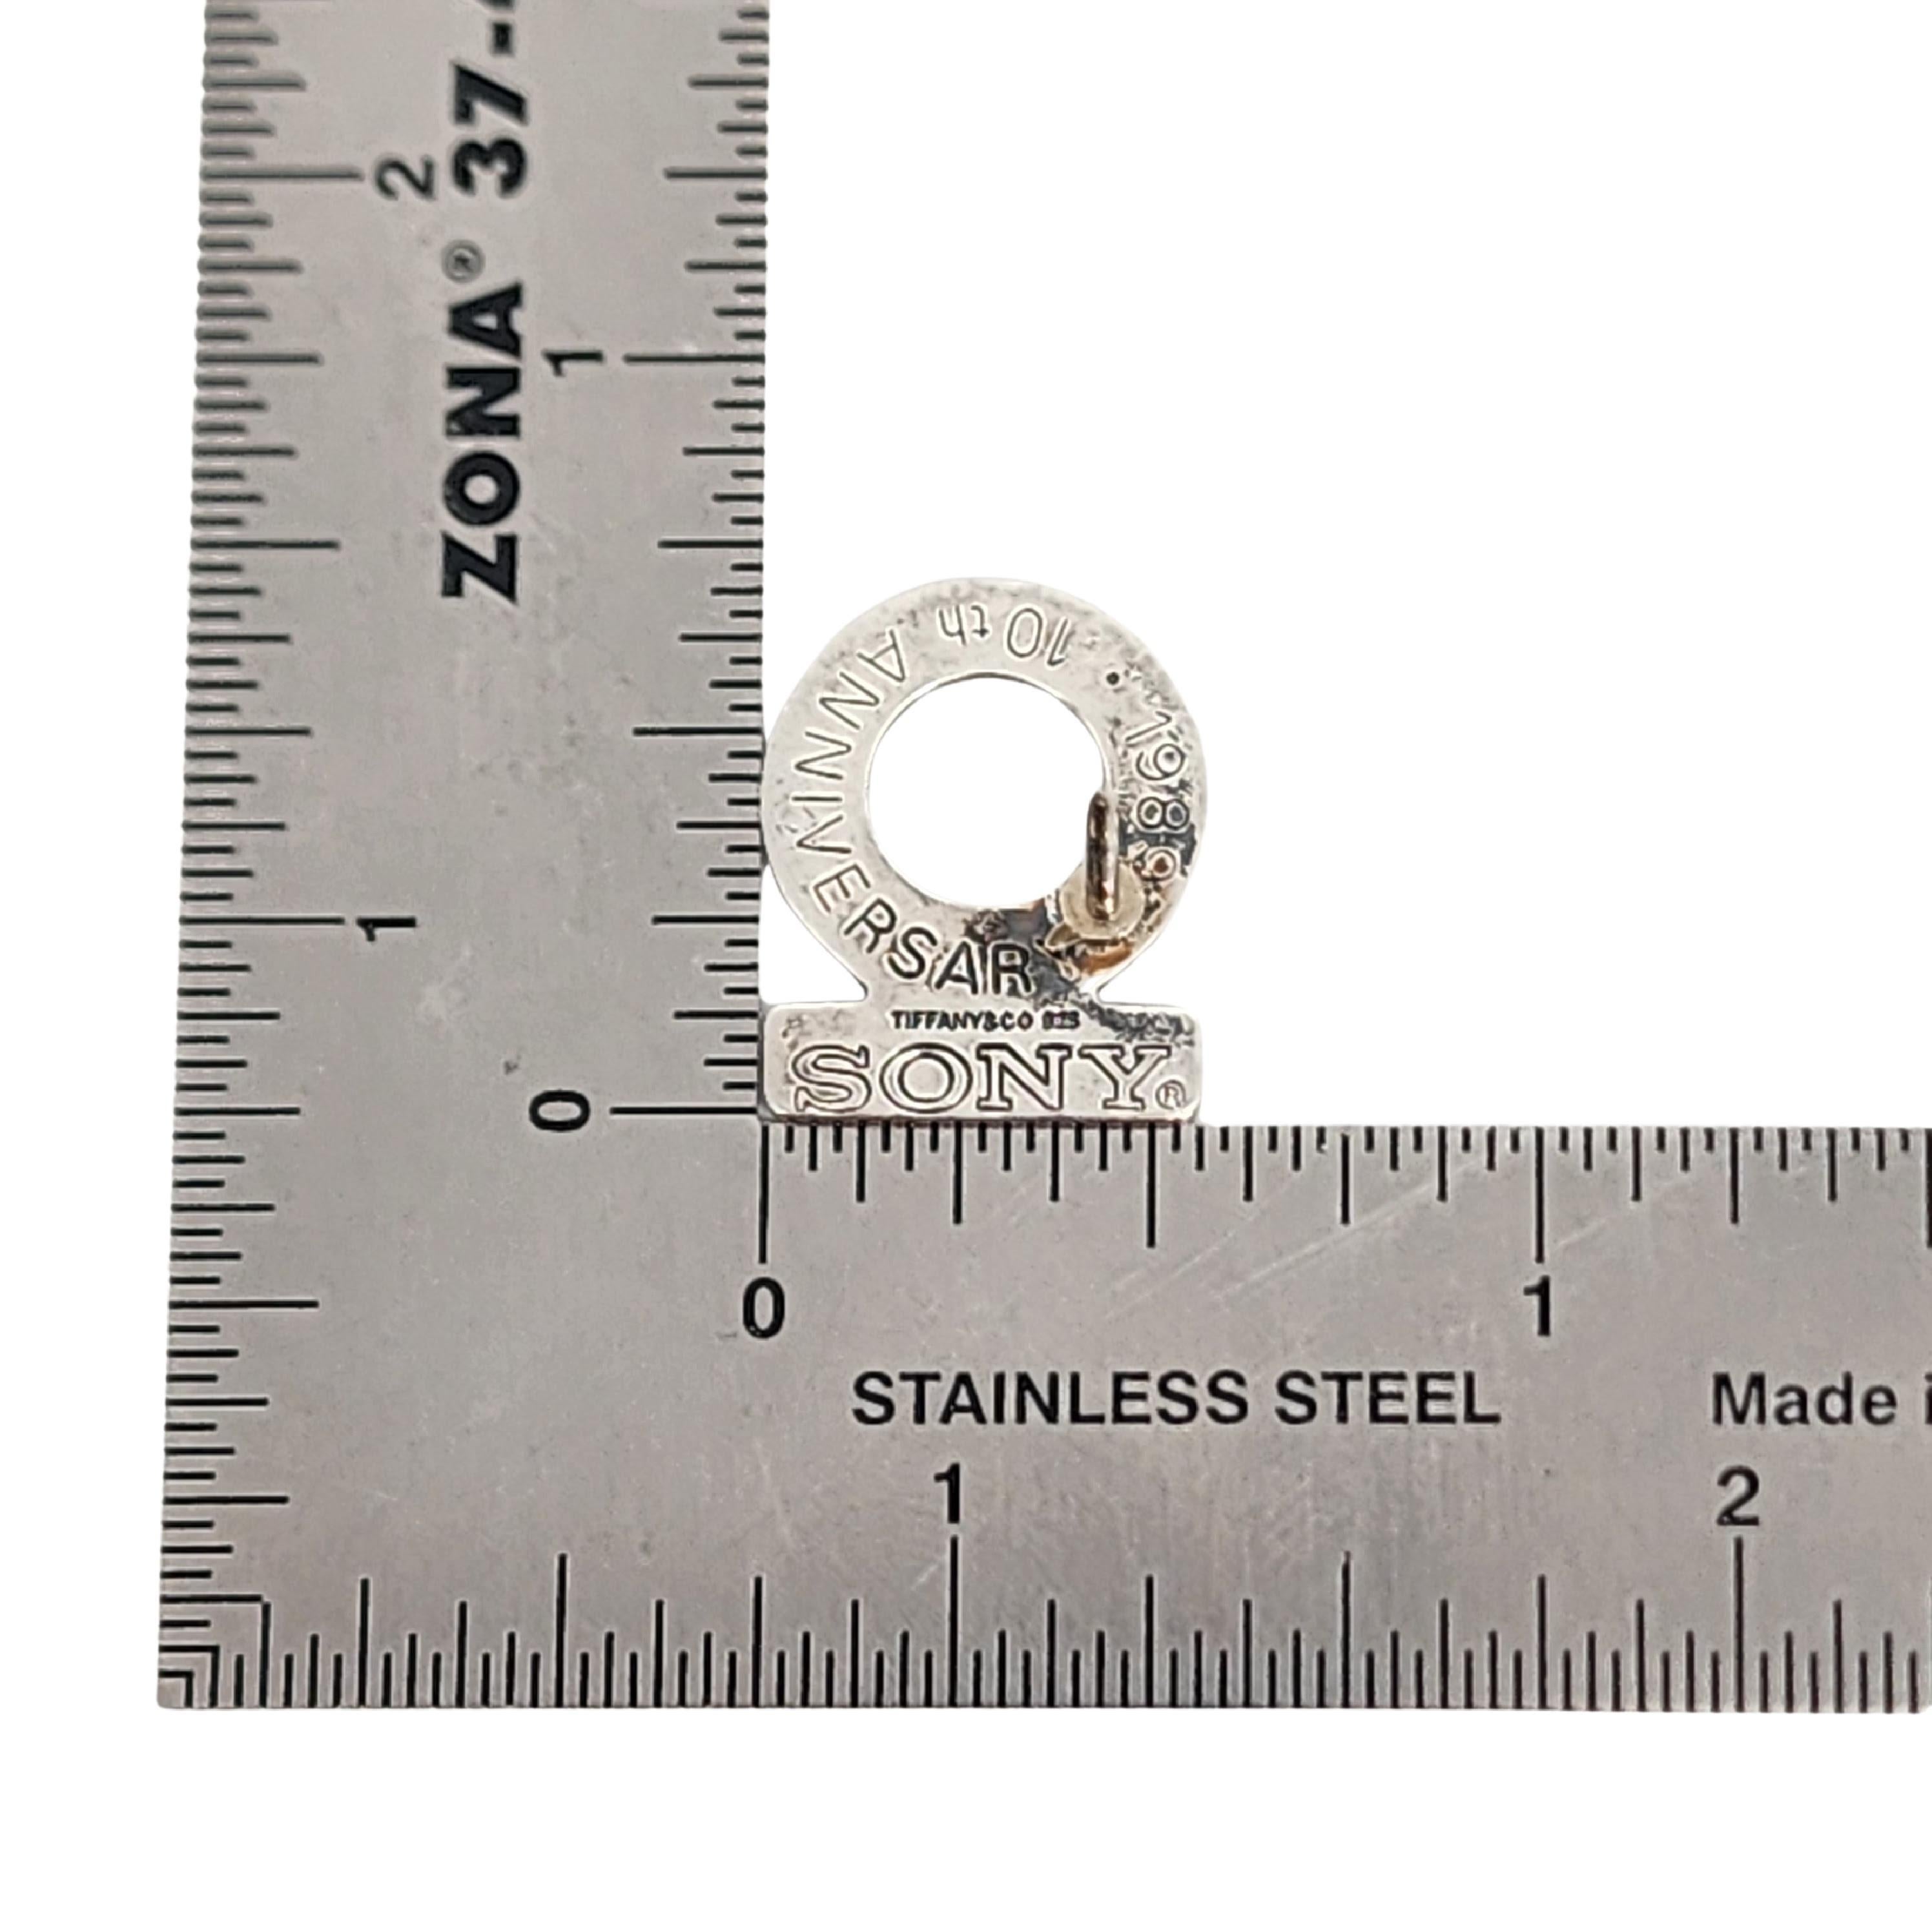 Tiffany & Co Sterling Silver Sony Walkman 10th Anniversary Tie Tack Pin #16312 2